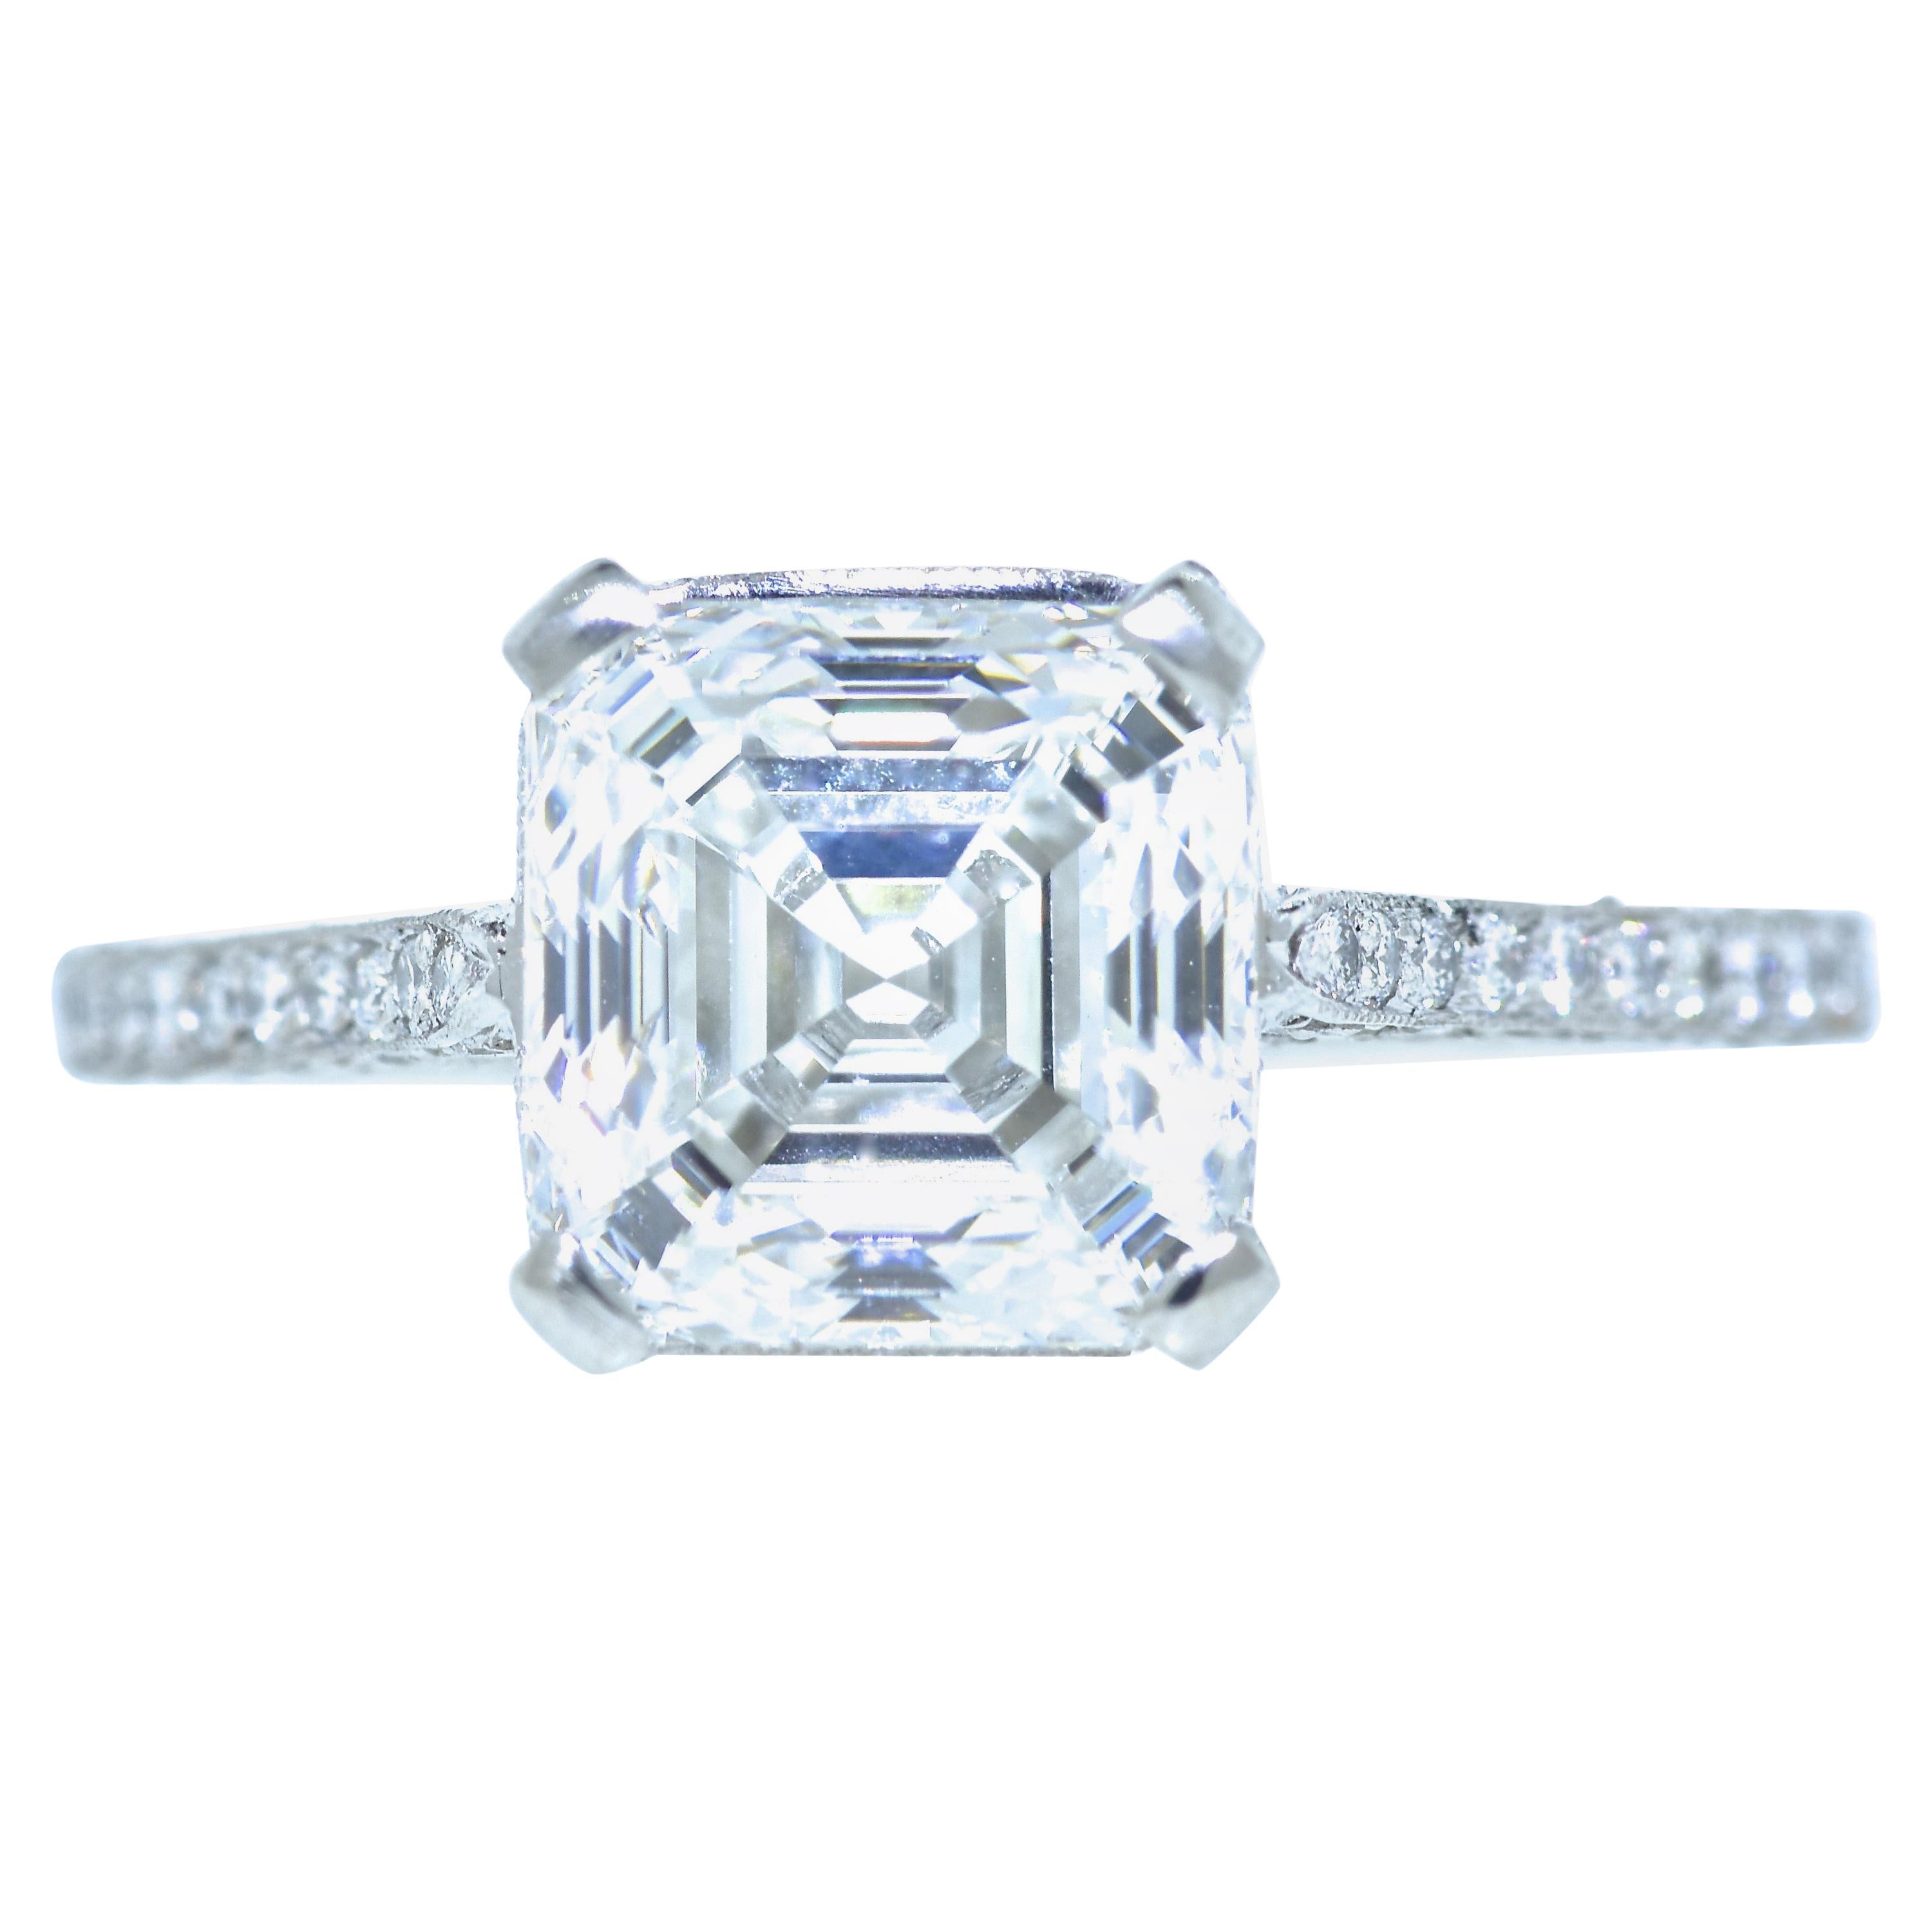 GIA Certified 3.01 Carat Asscher Cut Diamond Ring, Pierre/Famille